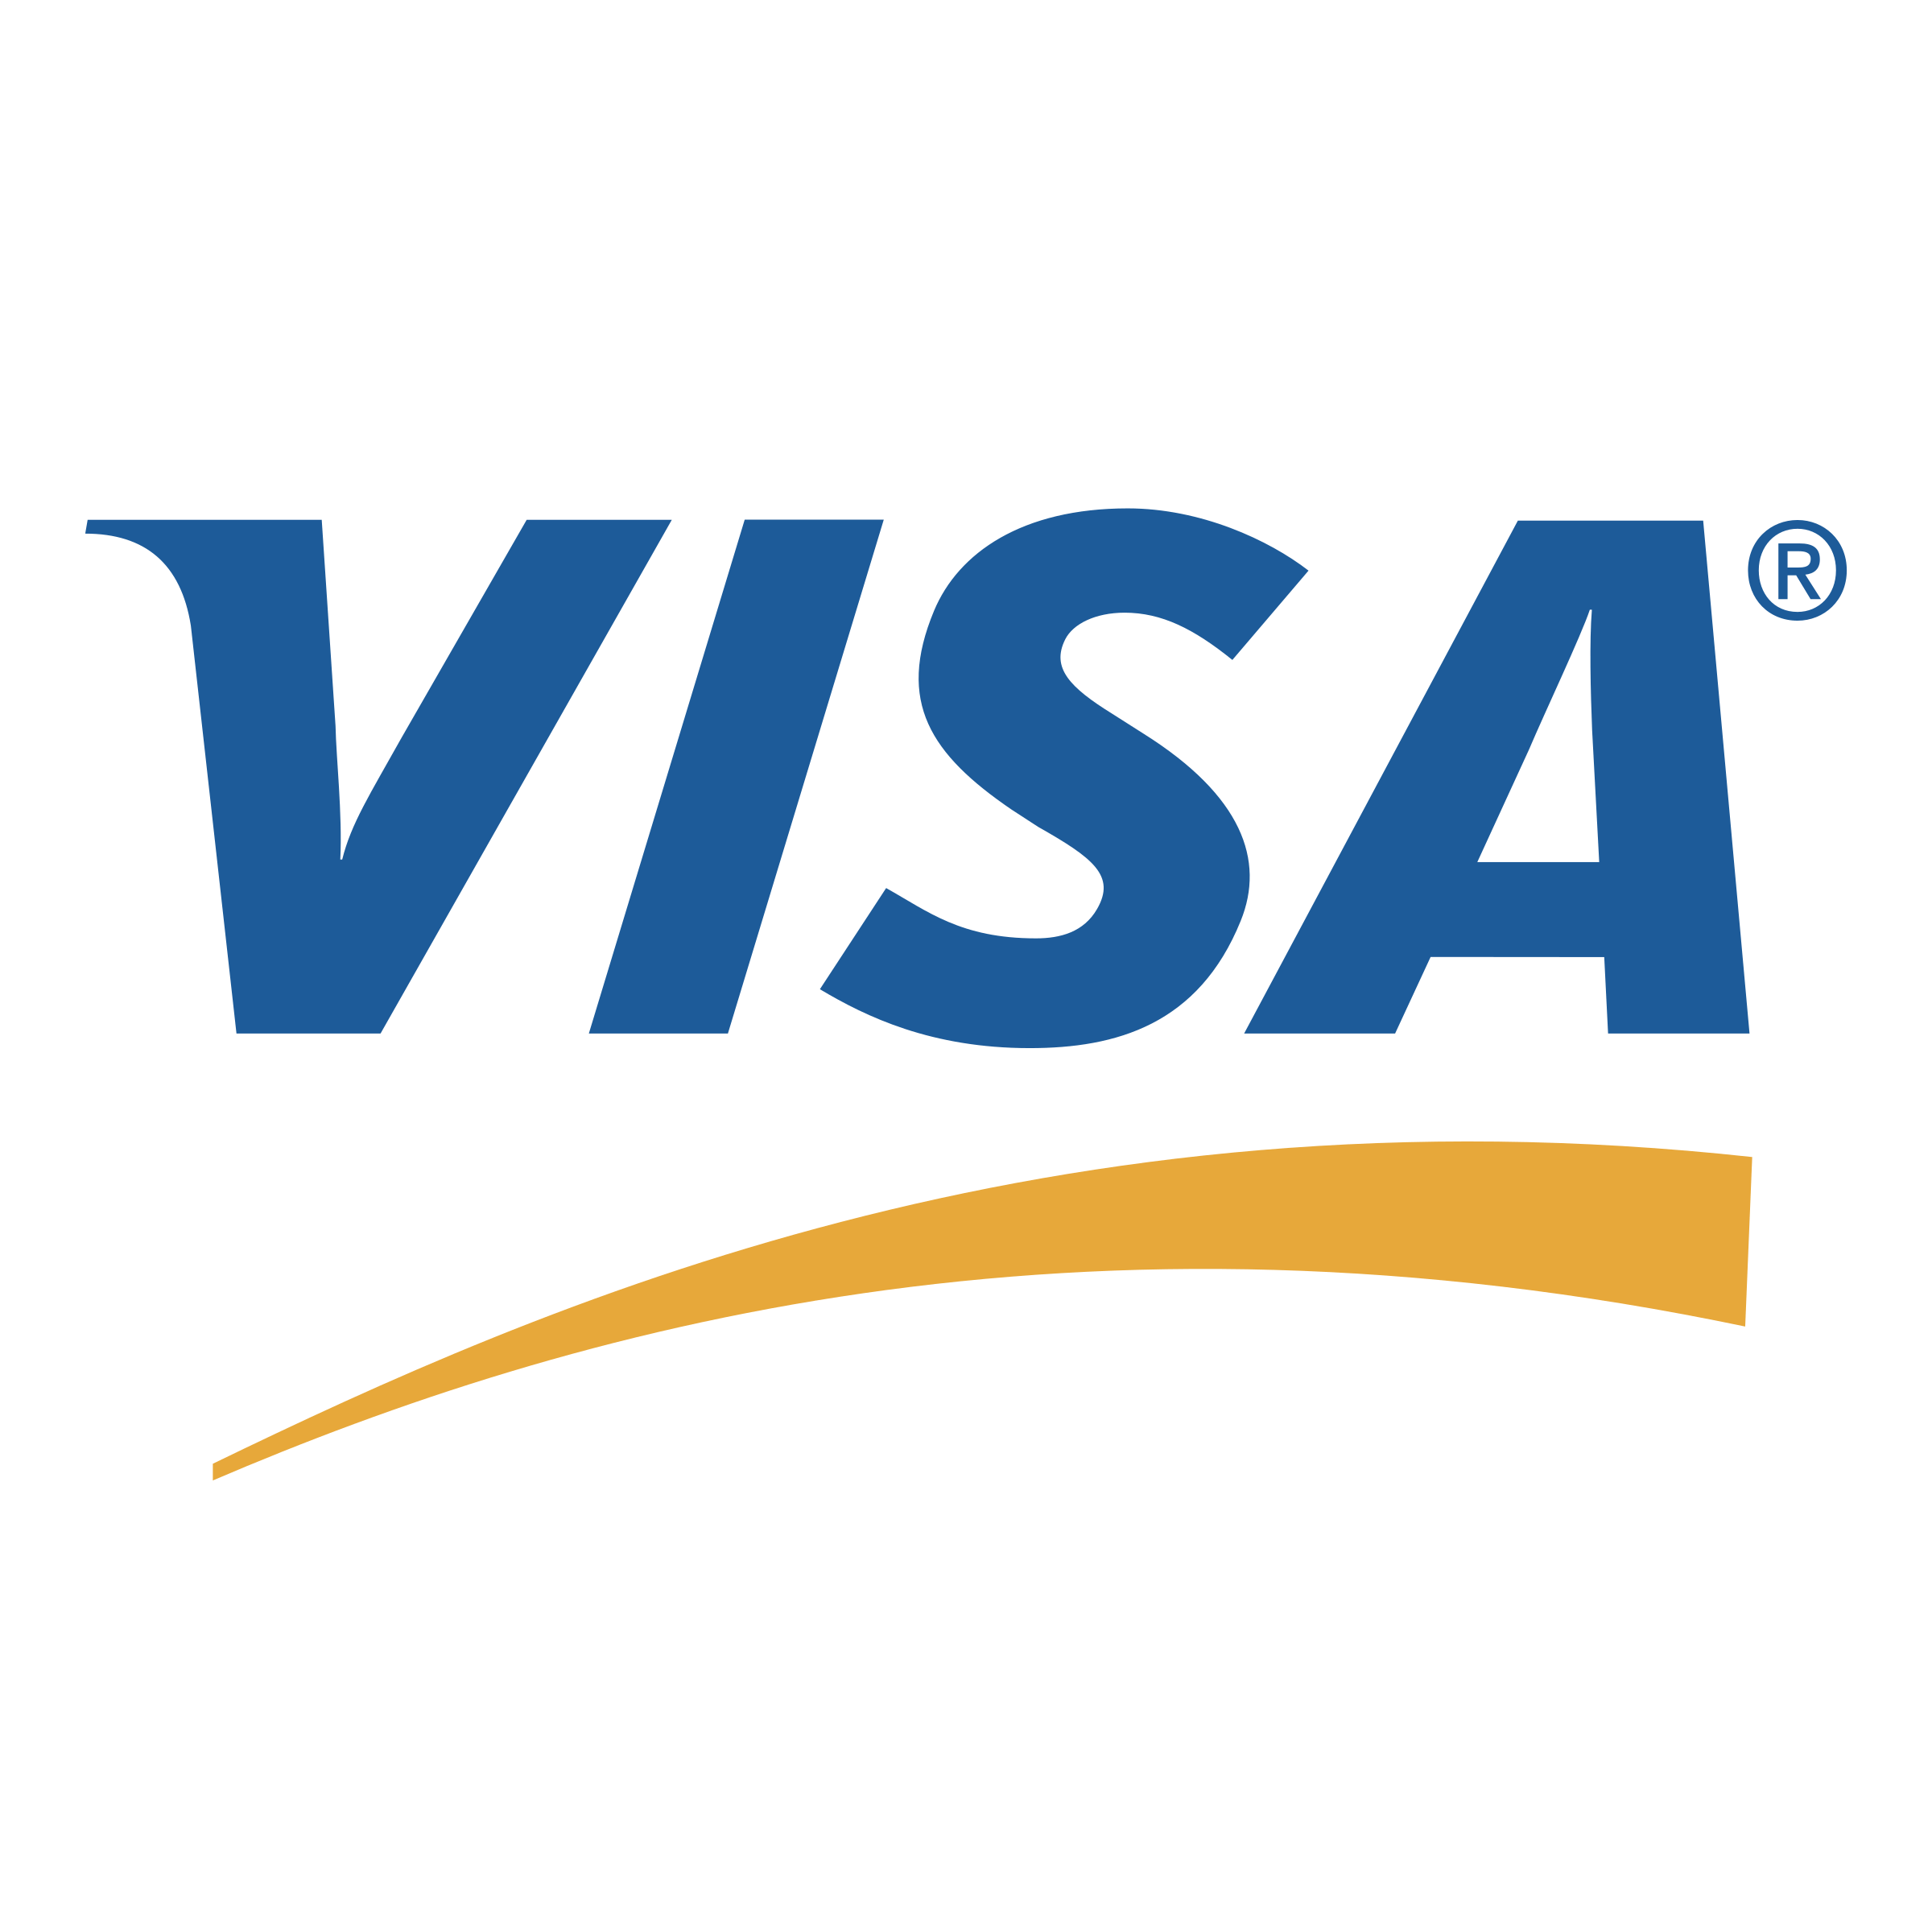 Visa Logo - VISA Logo PNG Transparent & SVG Vector - Freebie Supply